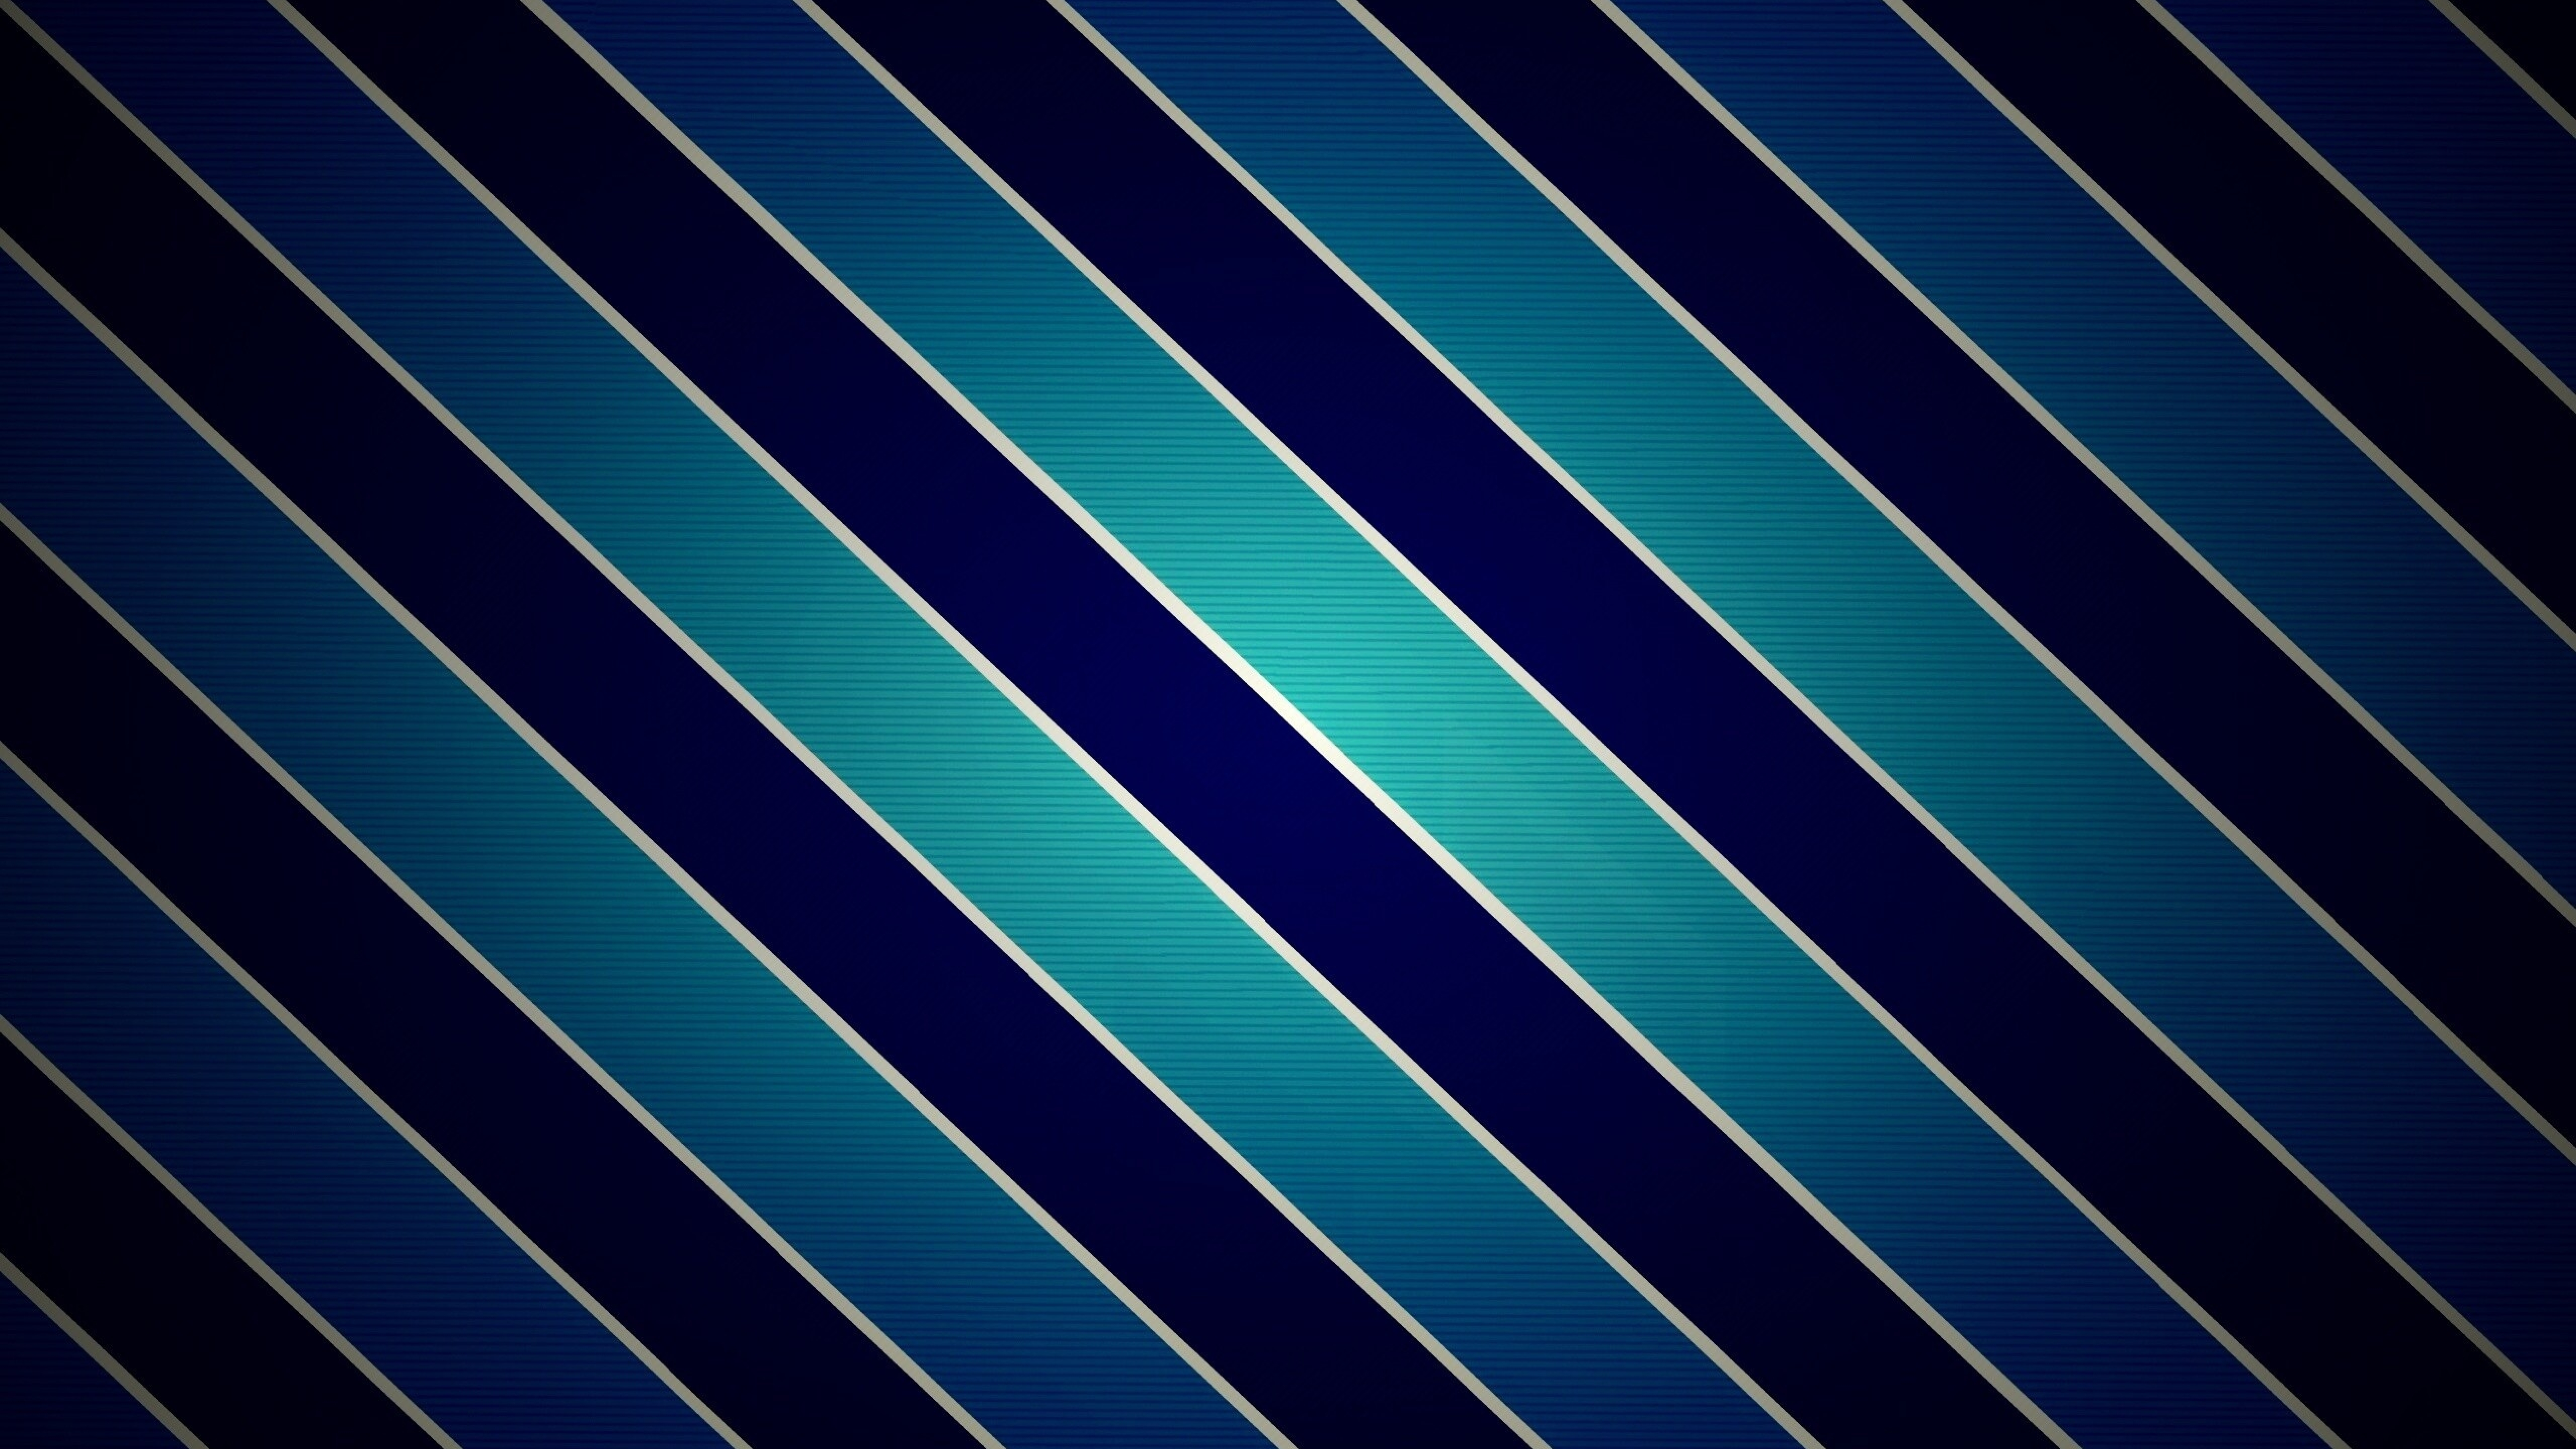 Download wallpaper 7680x4320 mountain, abstract, rainbow stripes, minimal 8k  wallpaper, 7680x4320 8k background, 28678